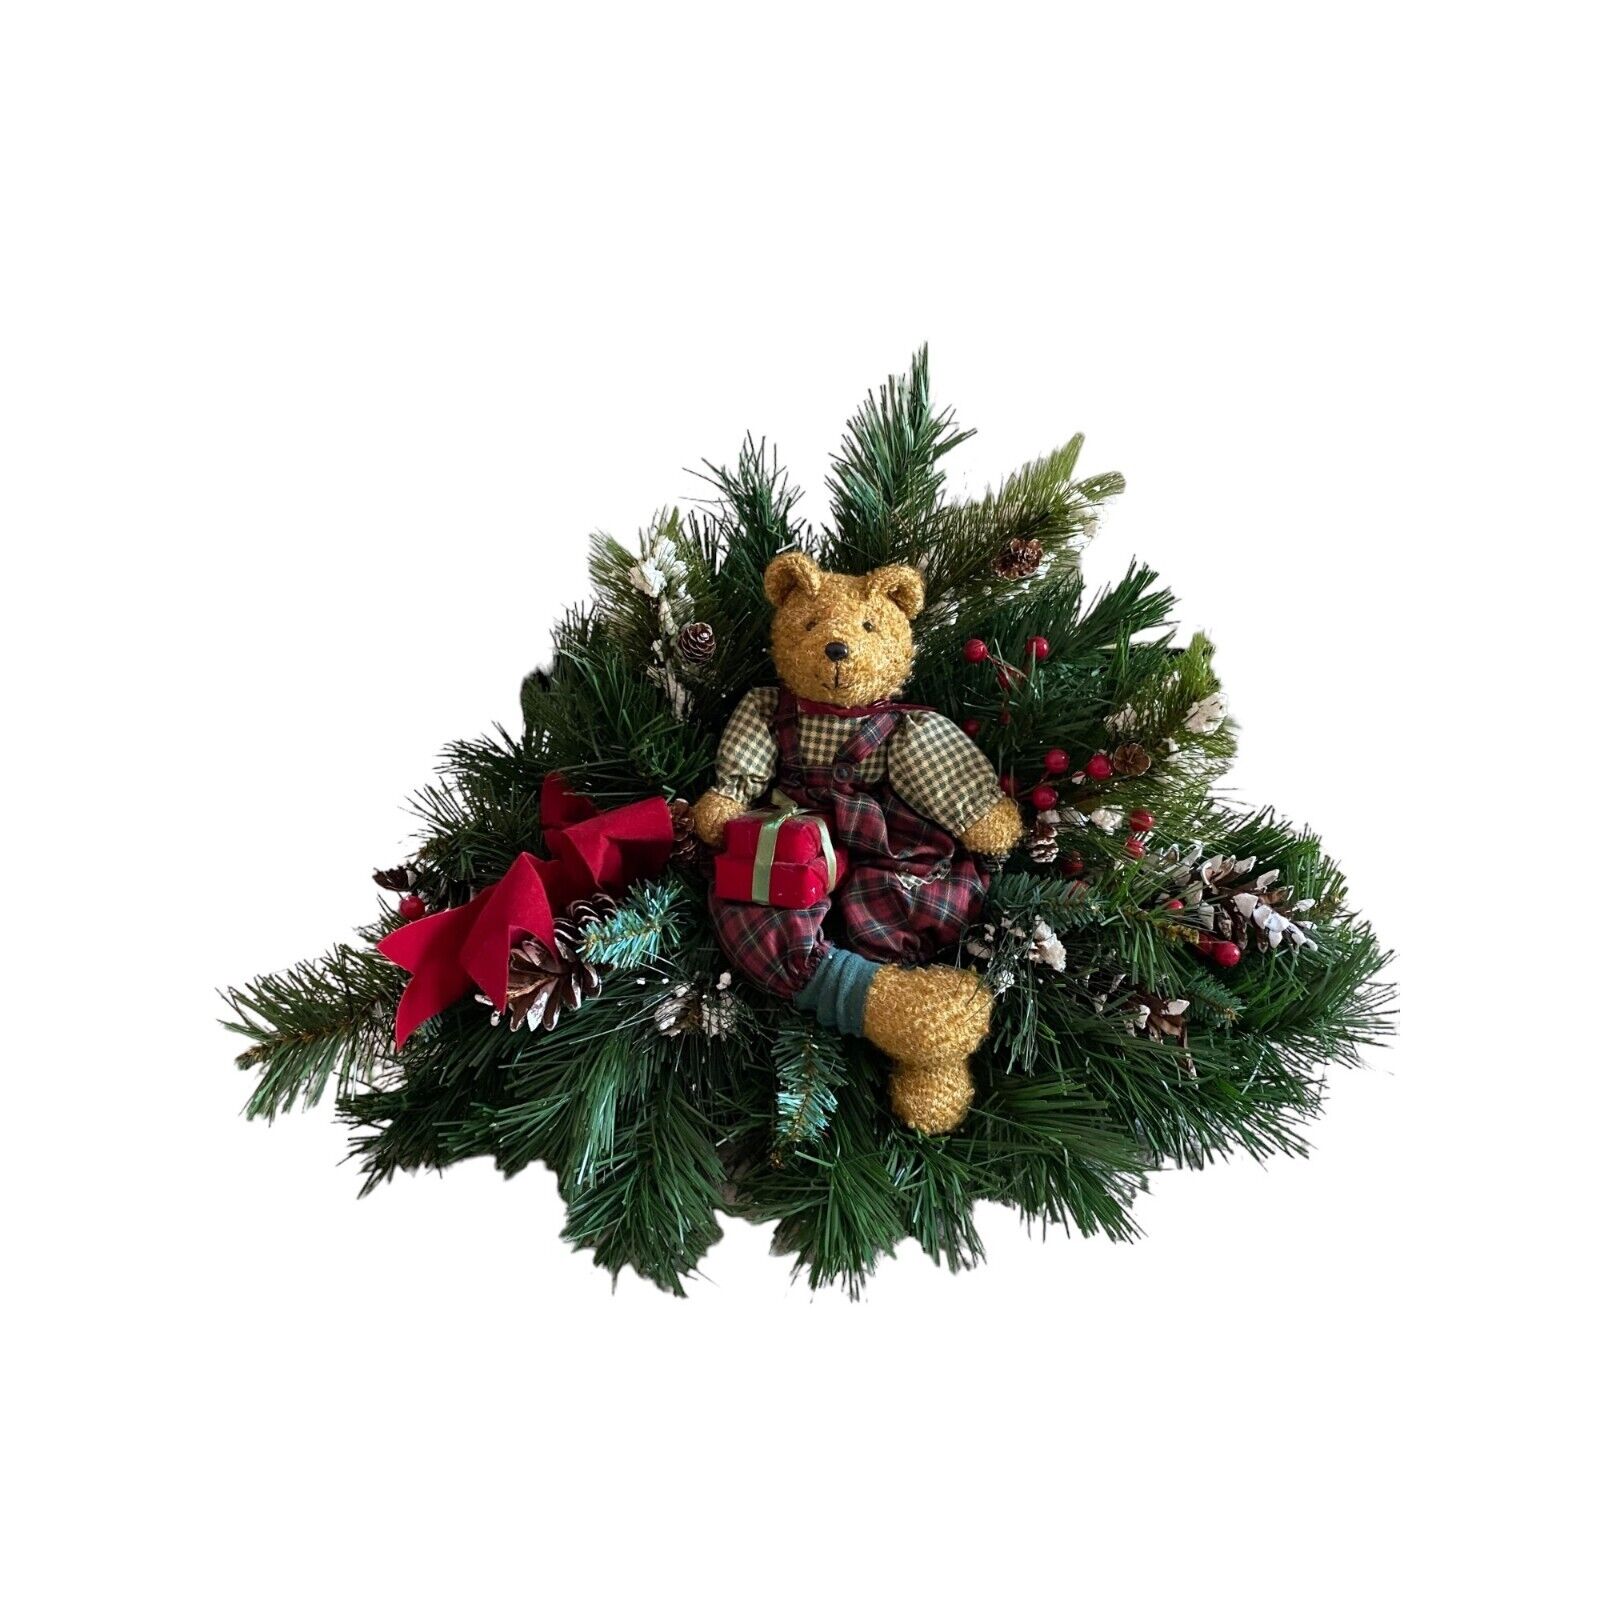 Vintage Christmas Teddy Bear Floral arrangement Winter Decor